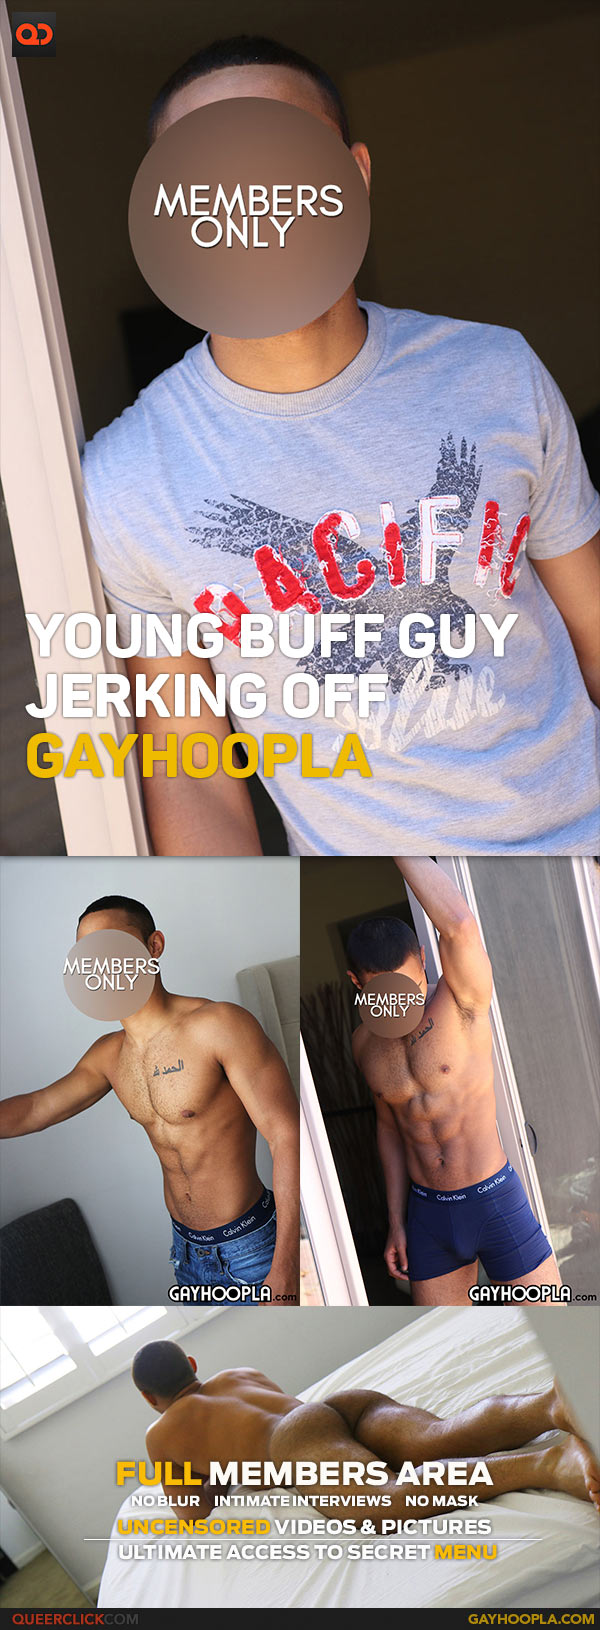 GayHoopla: Young Buff Guy Jerking Off - Secret Menu Model